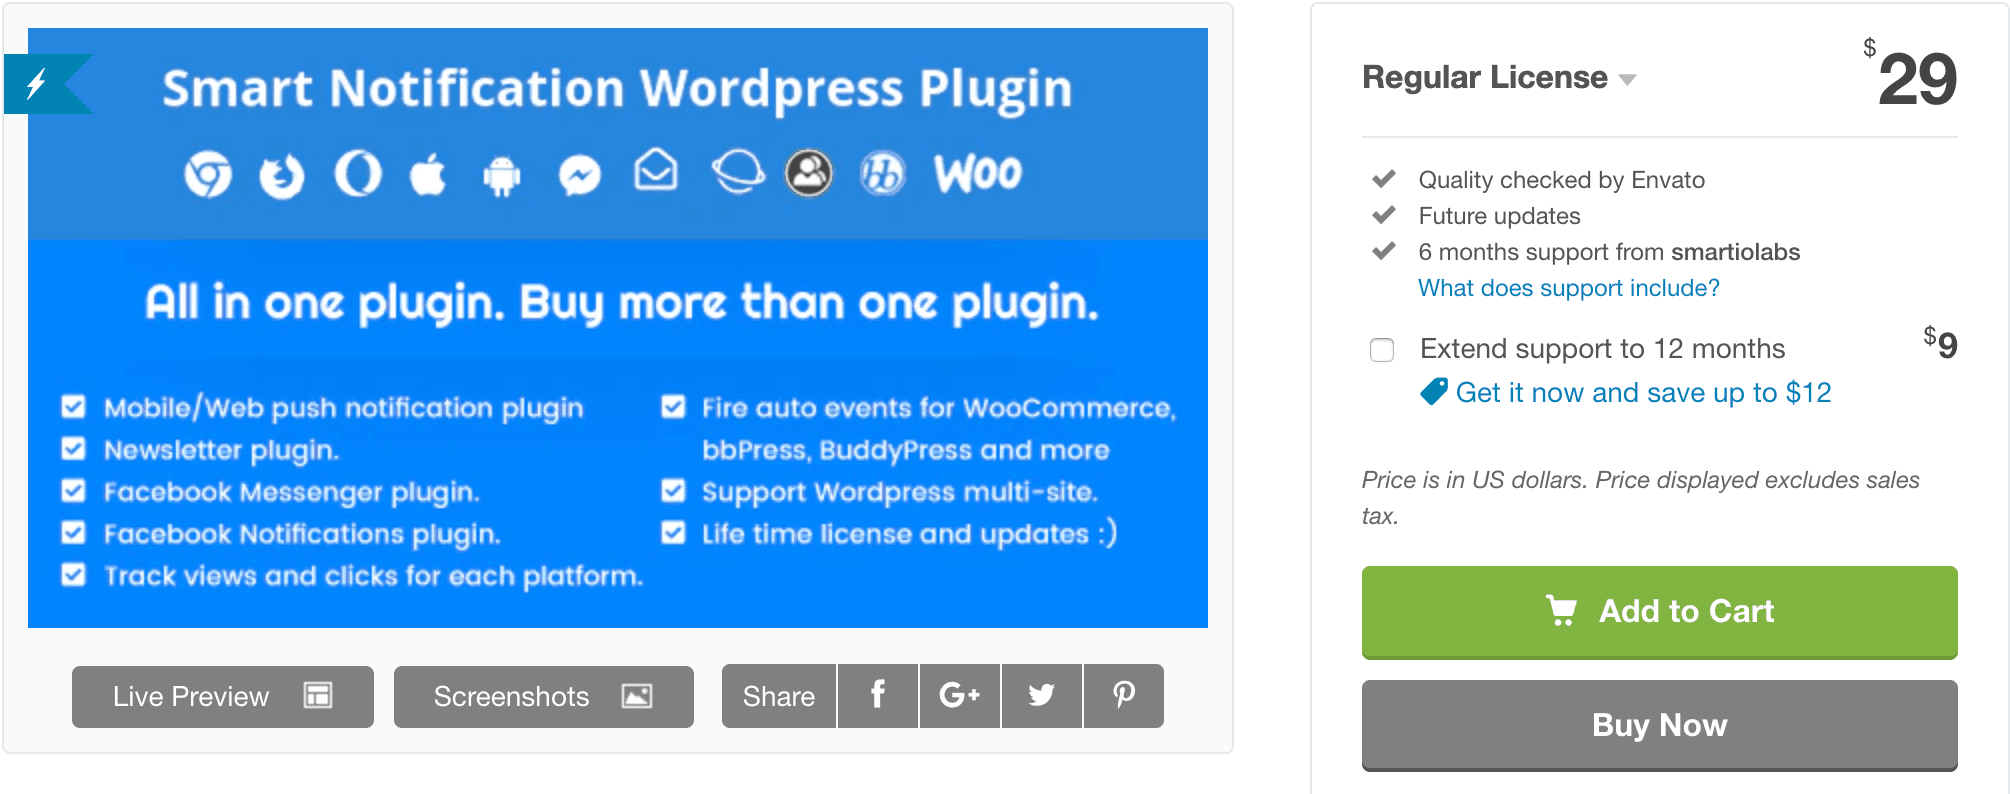 The Smart Notification WordPress Plugin.